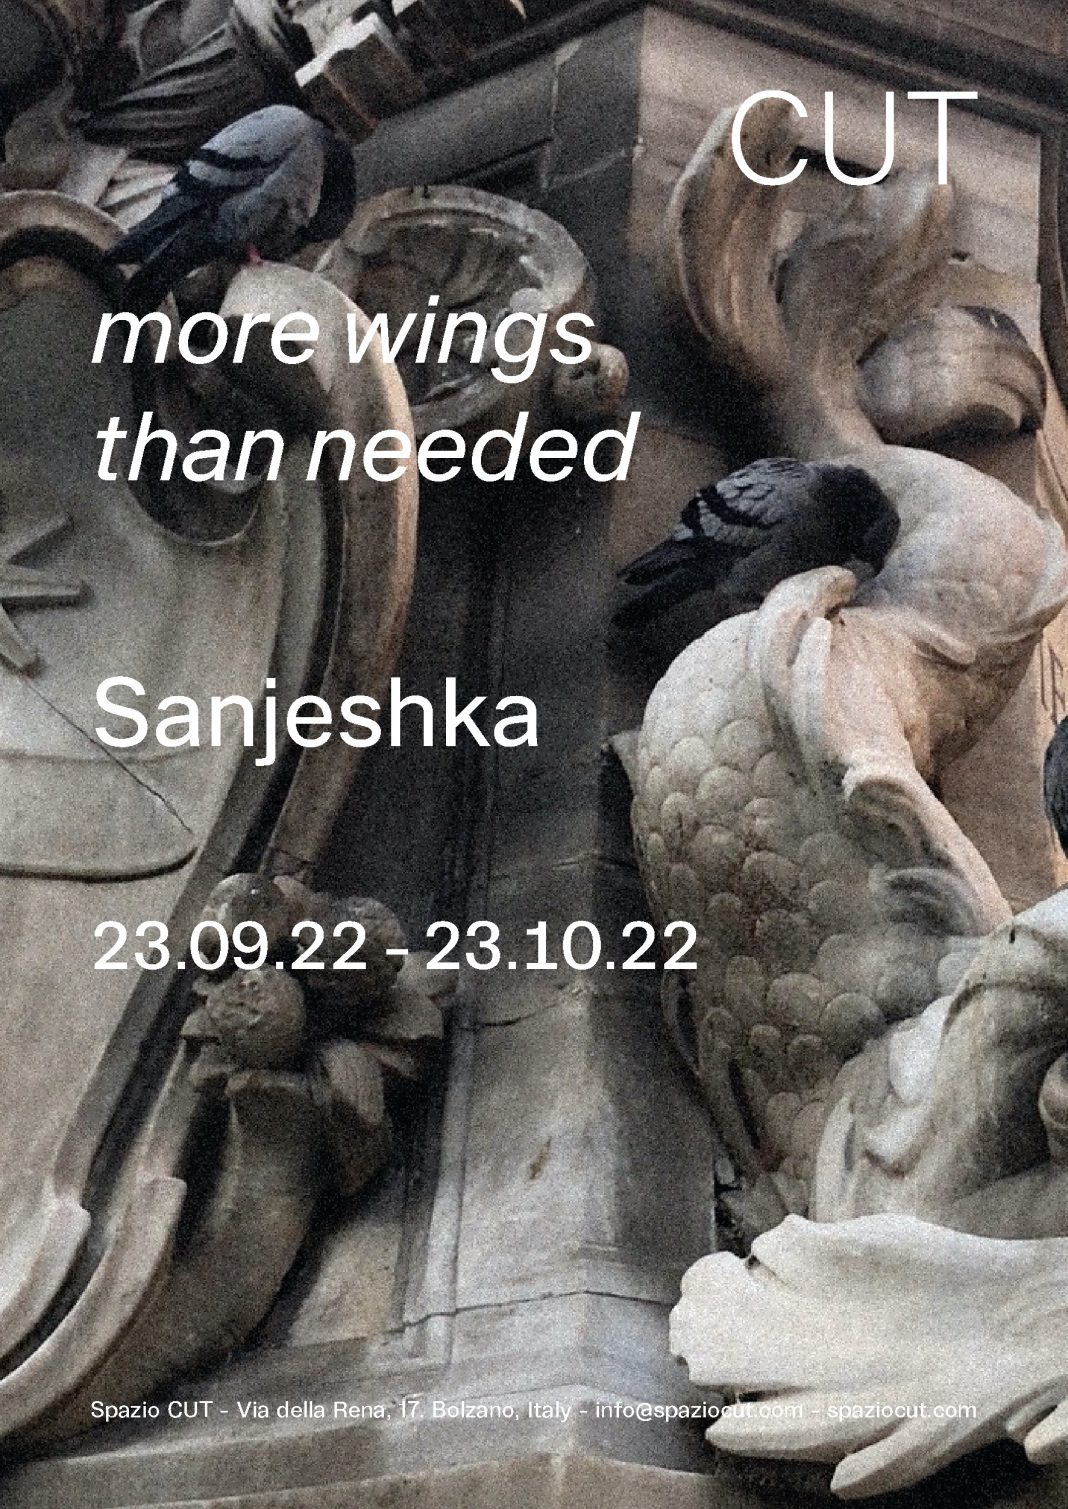 Sanjeshka – More wings than neededhttps://www.exibart.com/repository/media/formidable/11/img/187/Sanjeshka_morewingsthanneeded_SpazioCUT-1068x1509.jpg